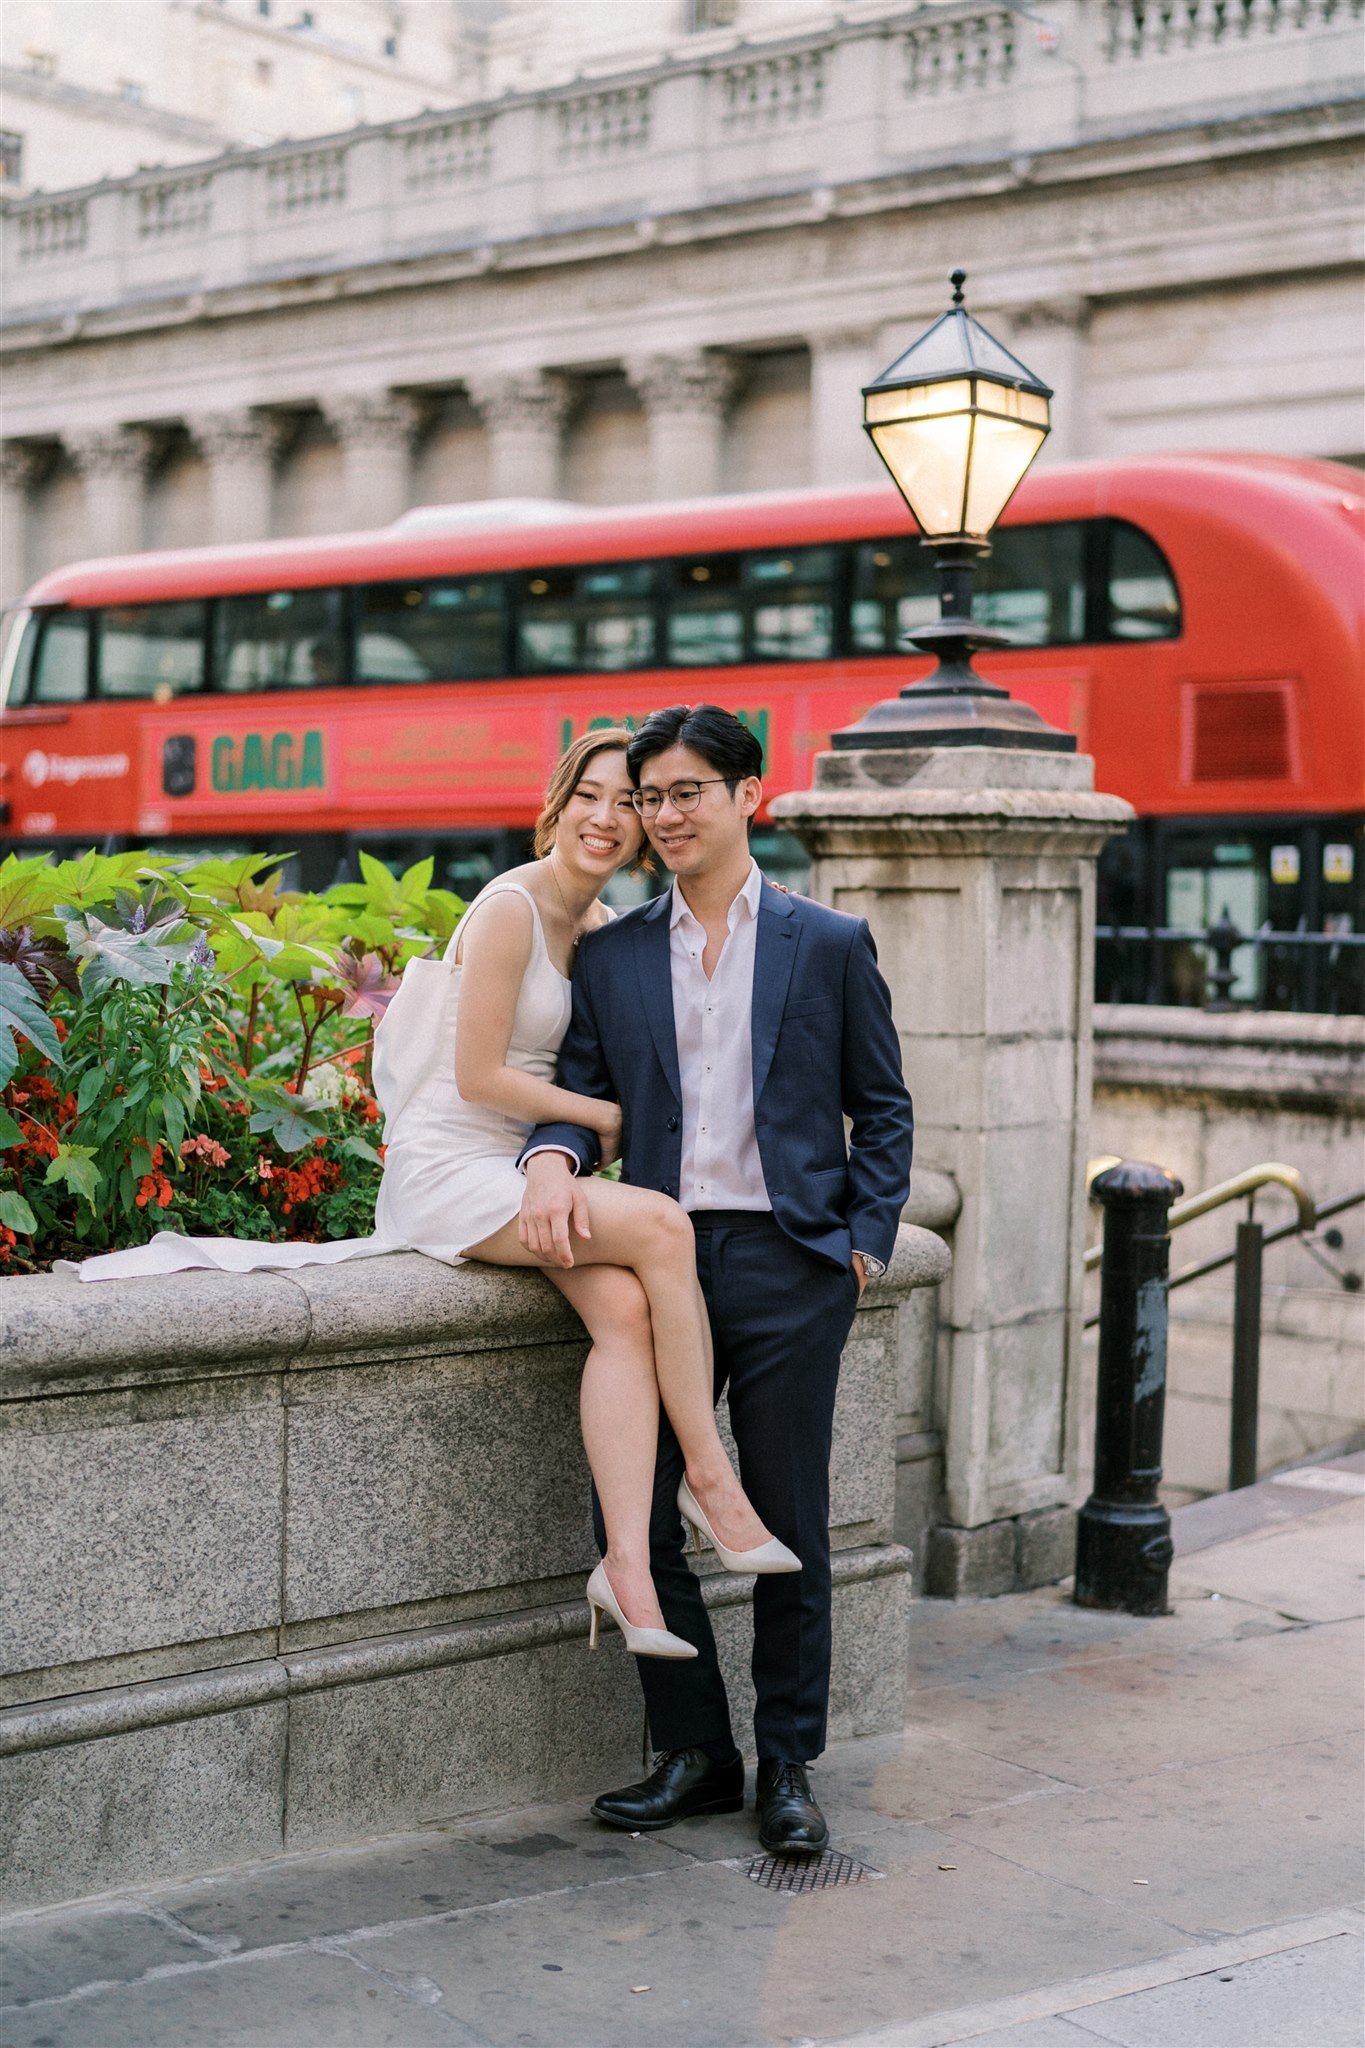 Couples portrait shoot in Bank, London